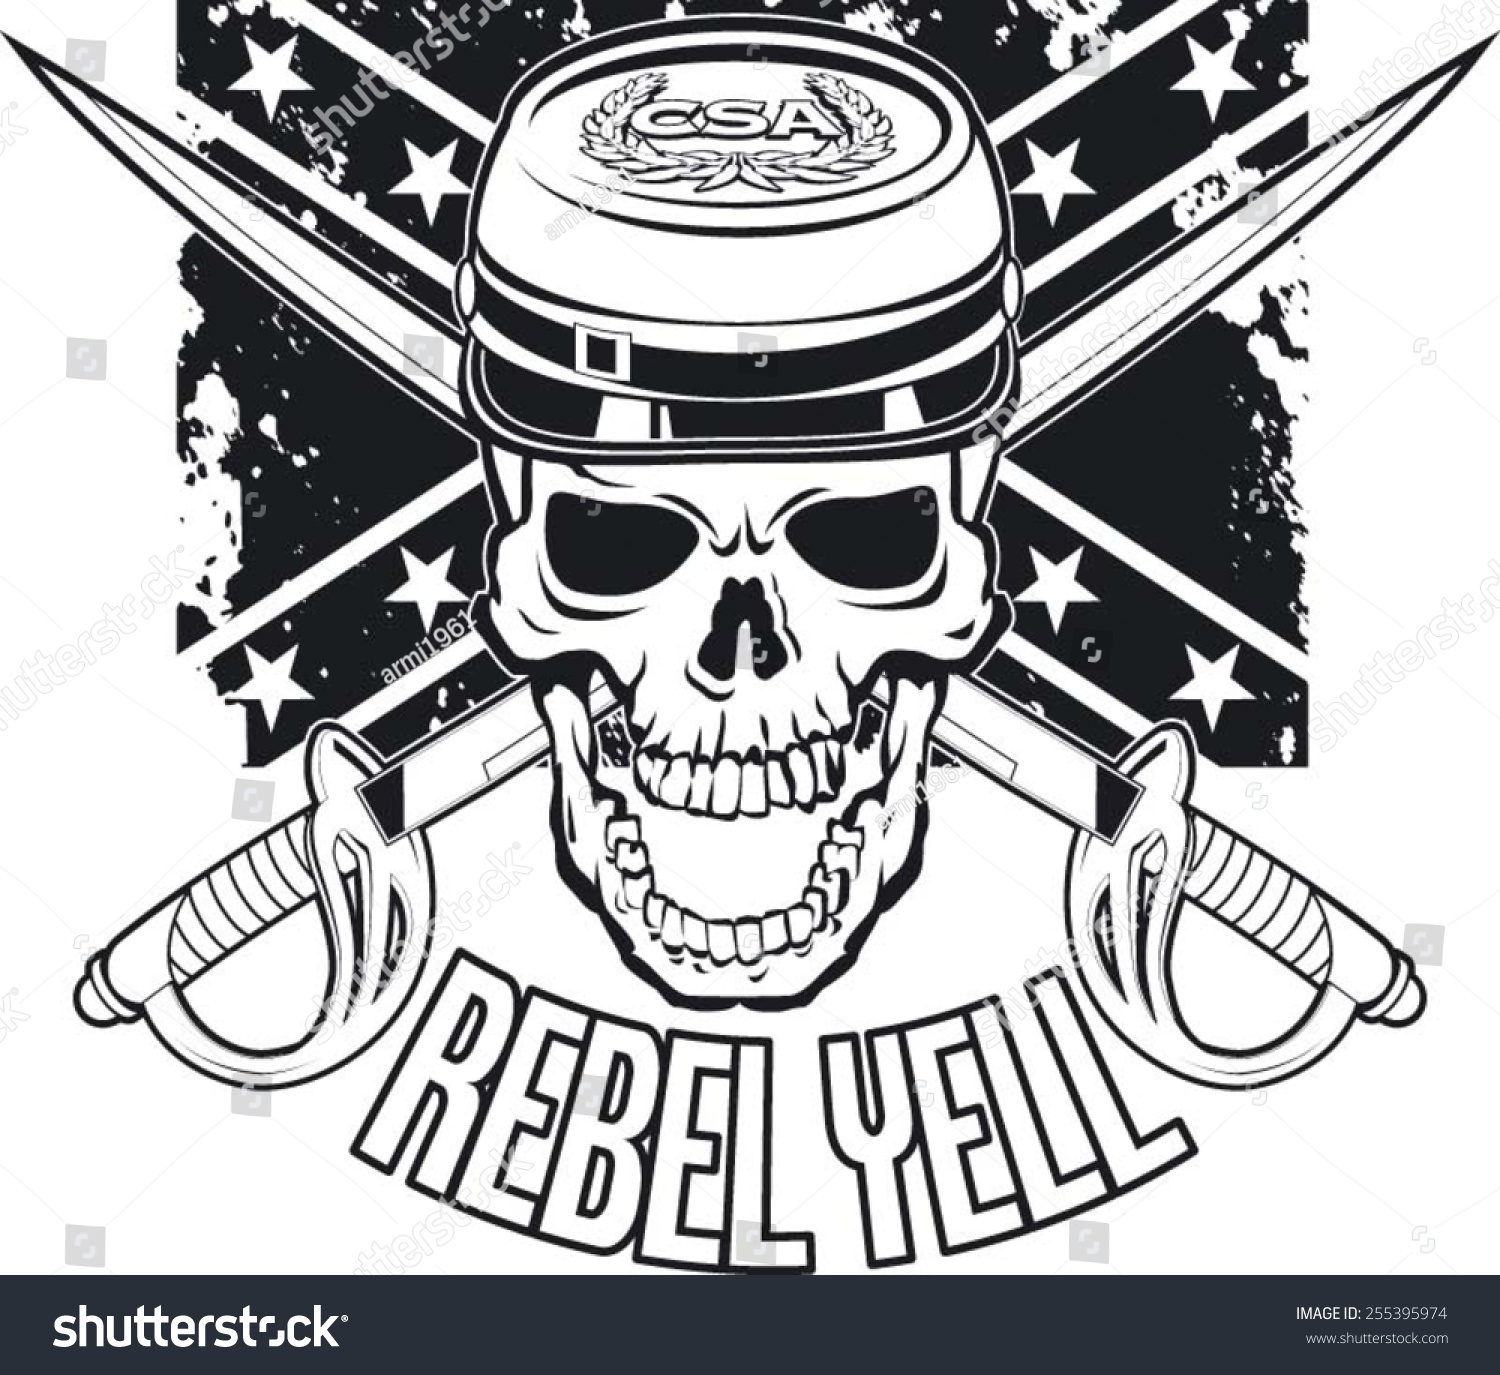 American Civil War Background Rebel Flag Stock Vector ...